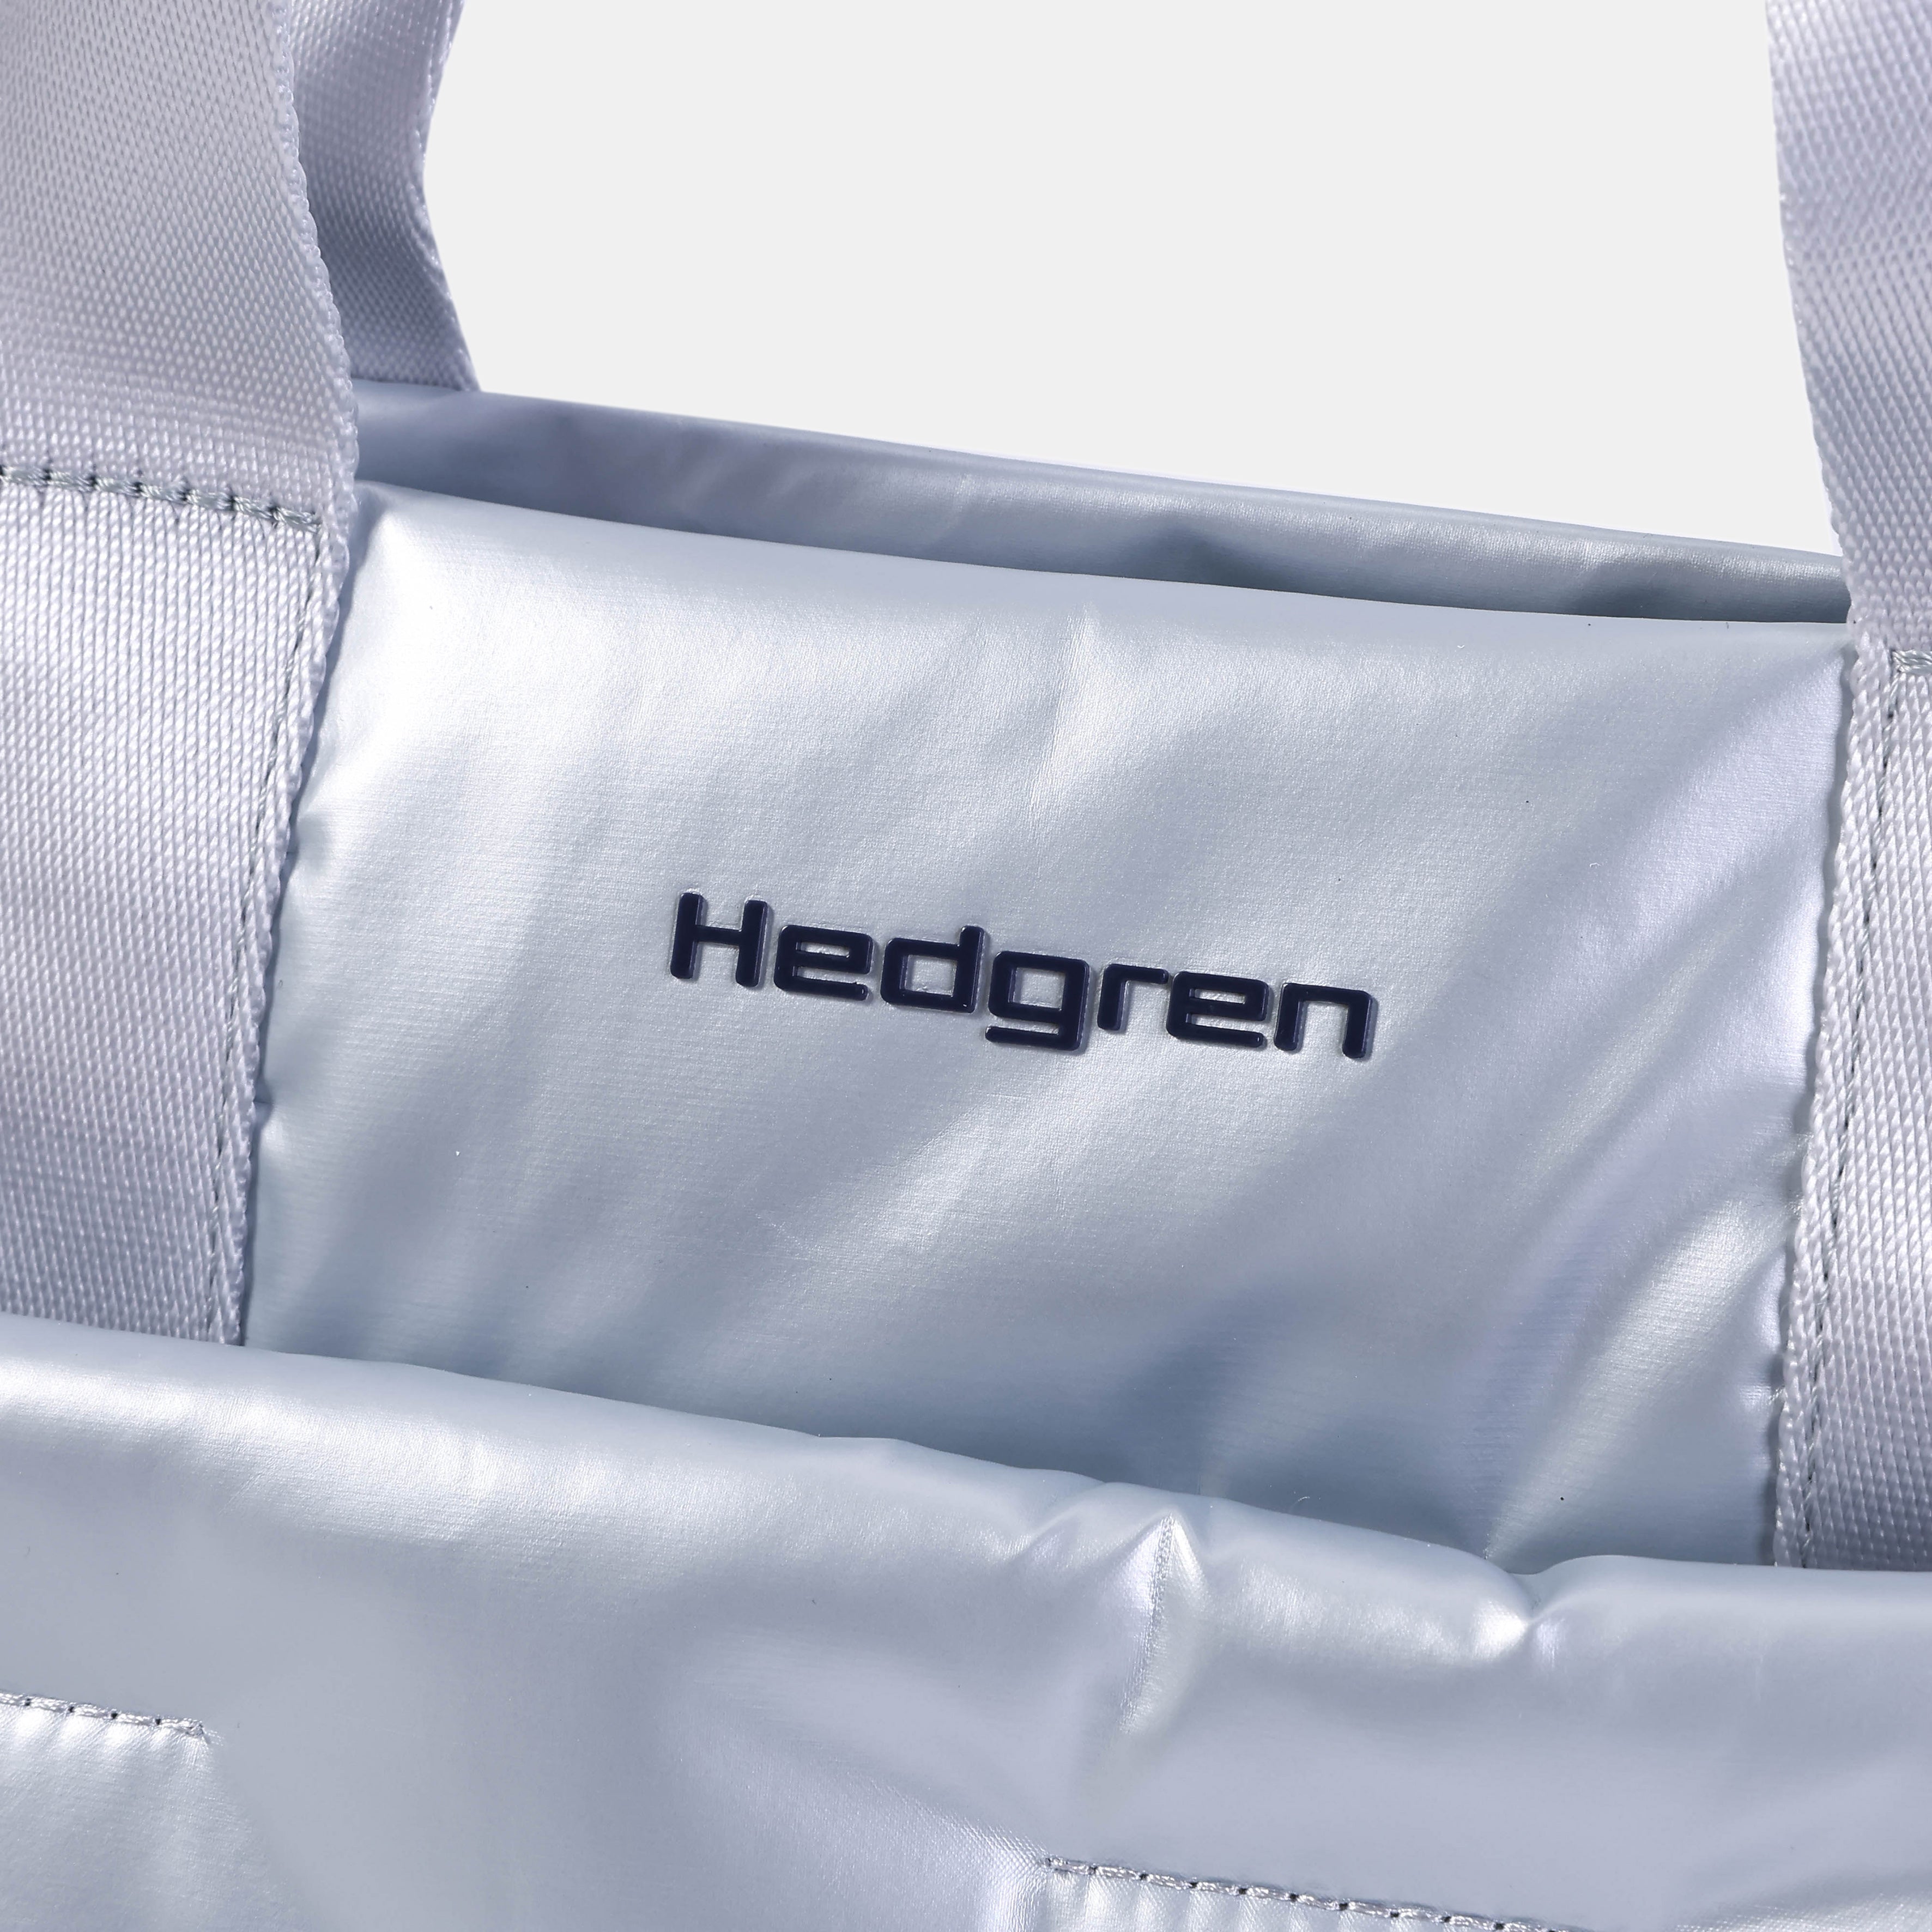 Hedgren Softy Pearlblue Bag